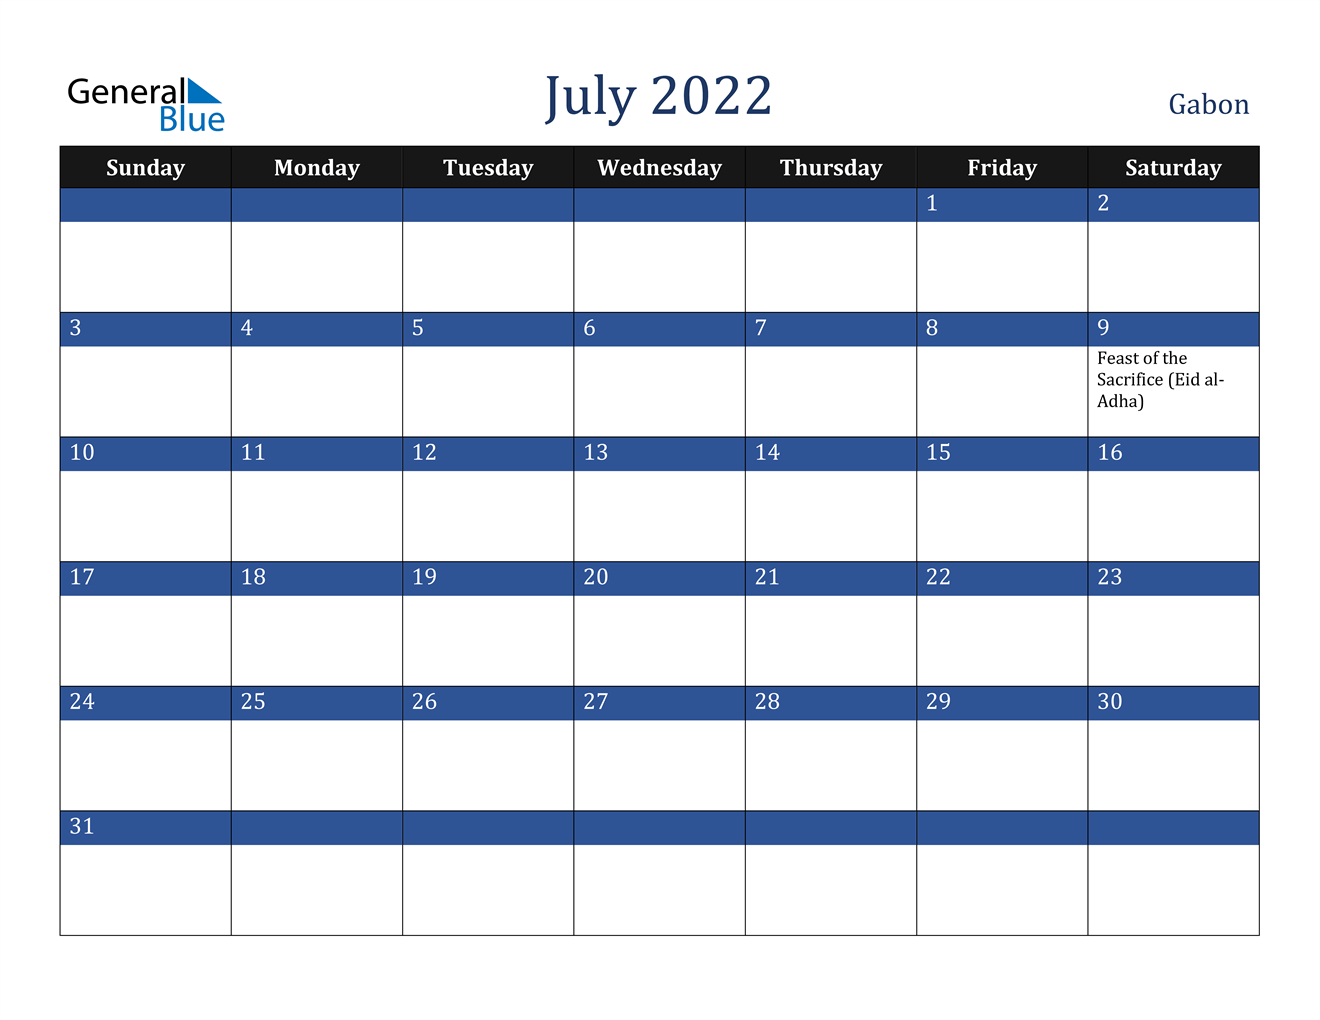 July 2022 Calendar - Gabon